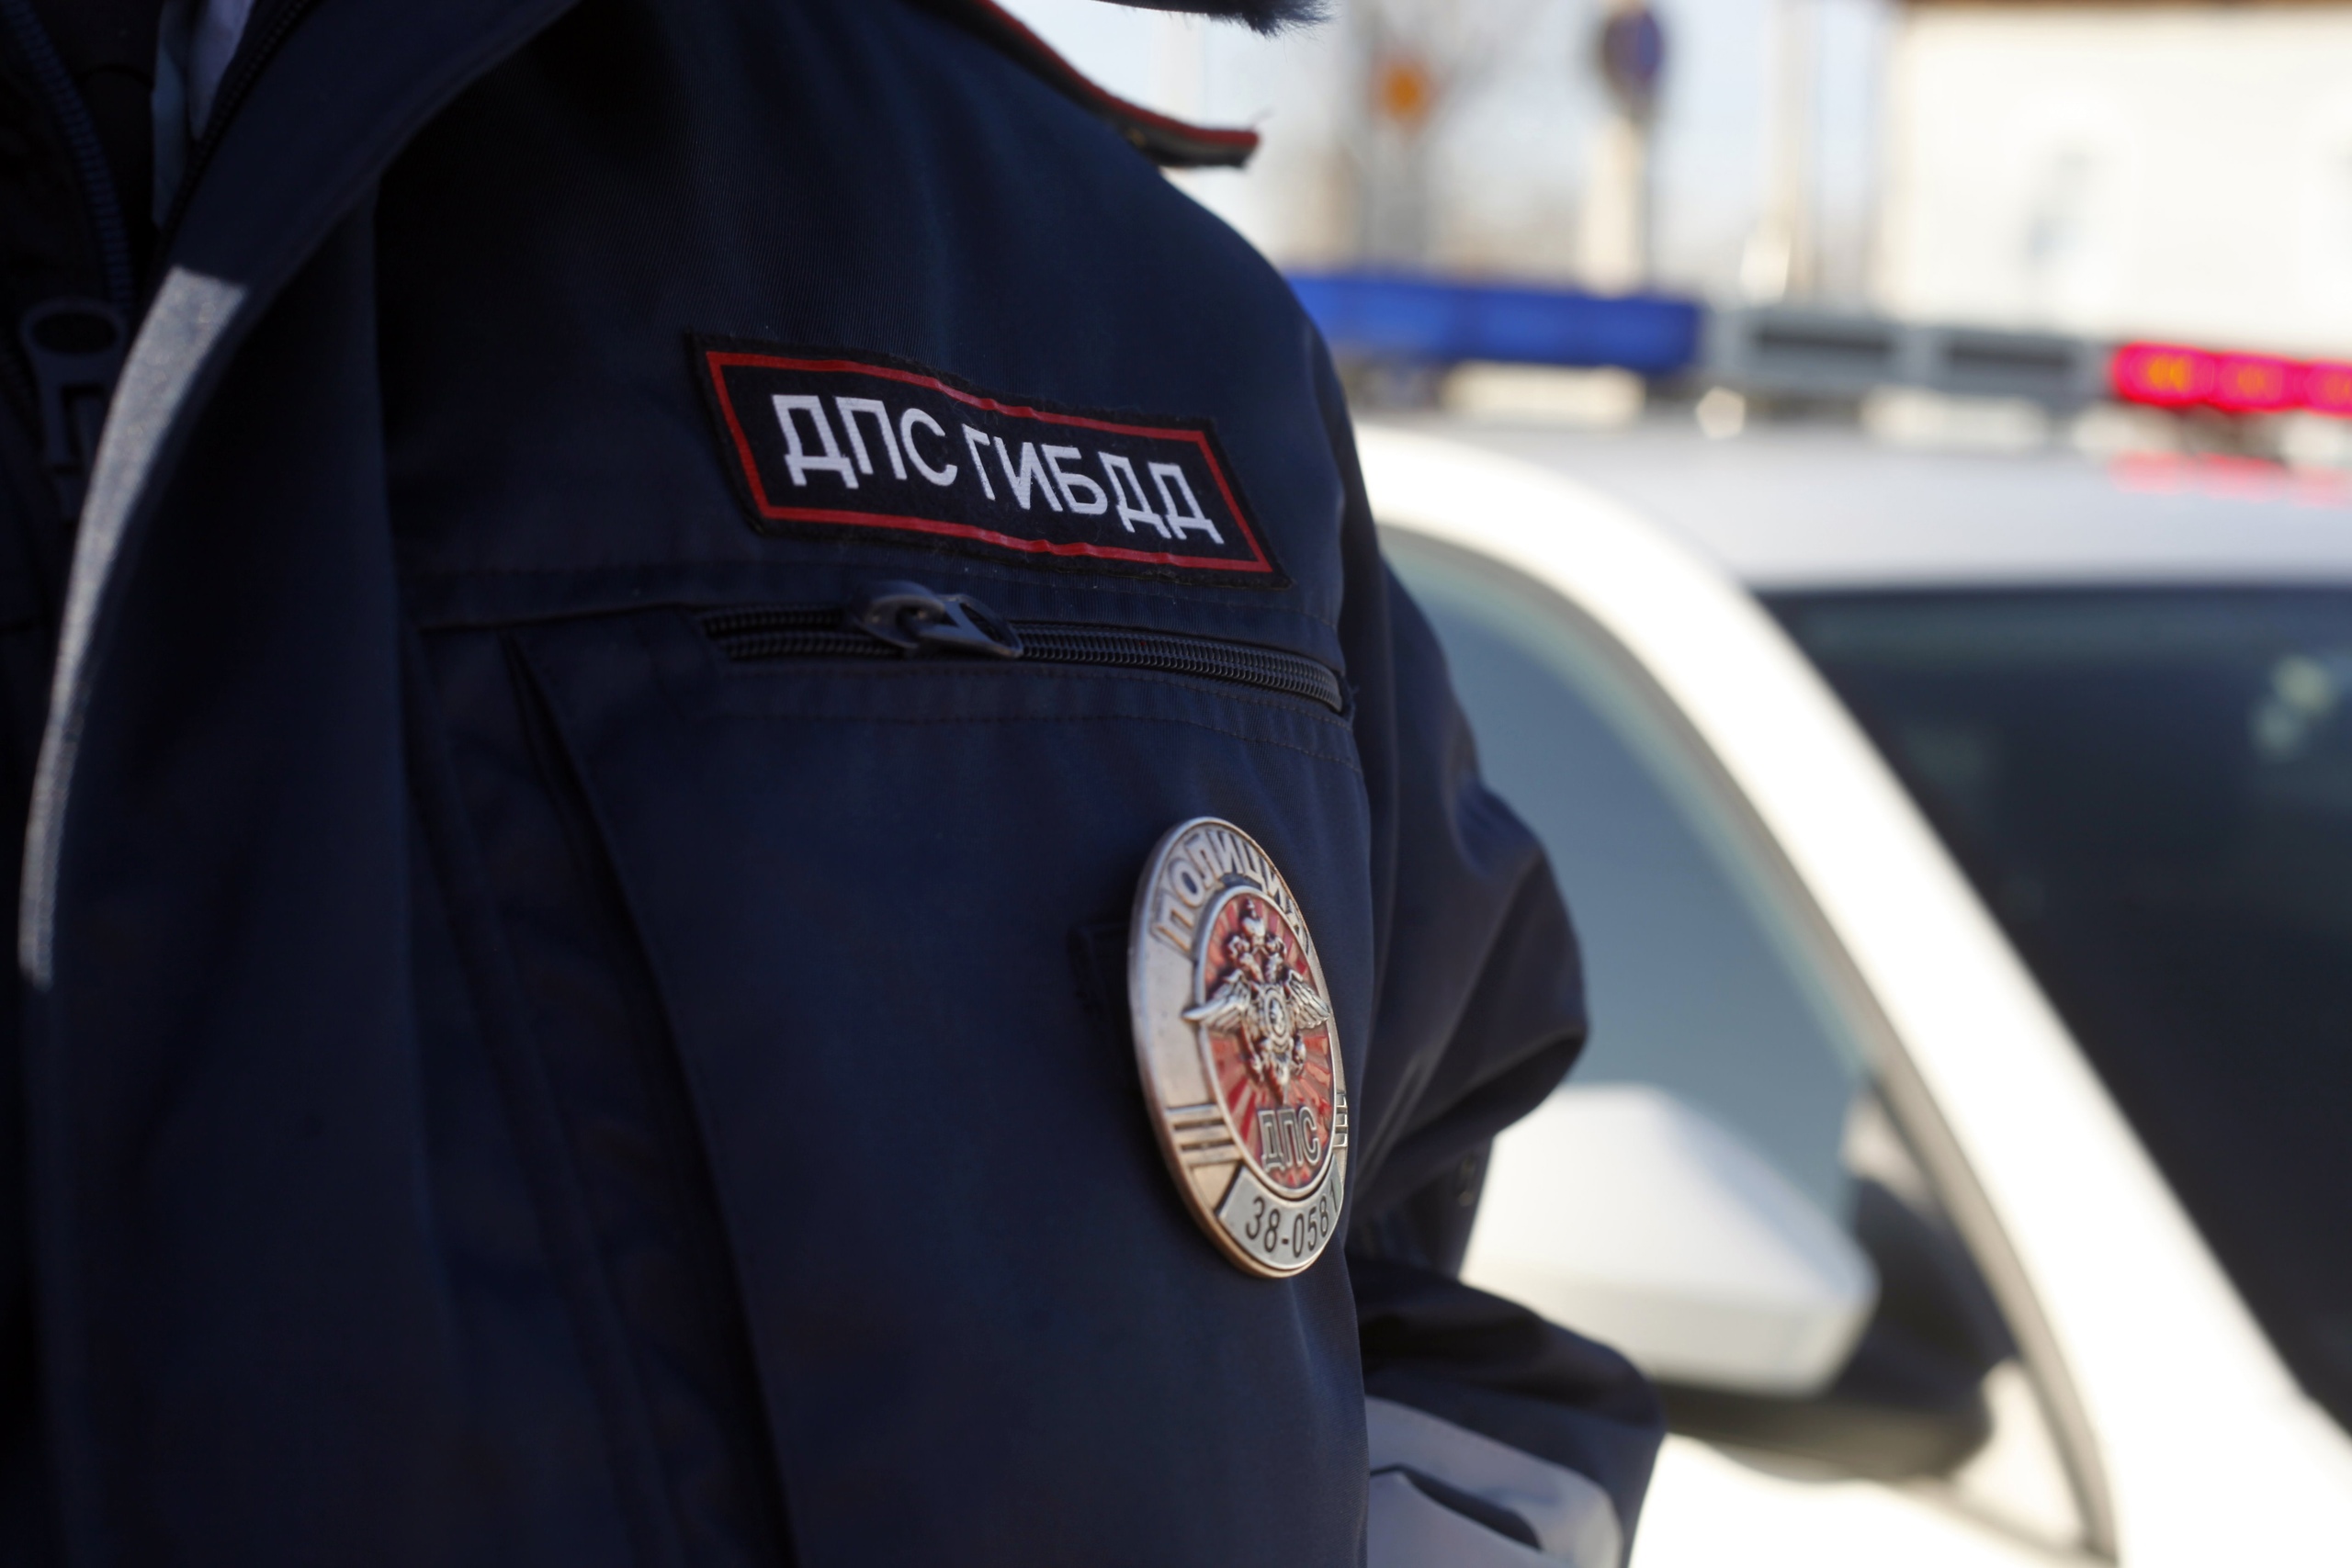 Двое мужчин напали на полицейских в Иркутской области